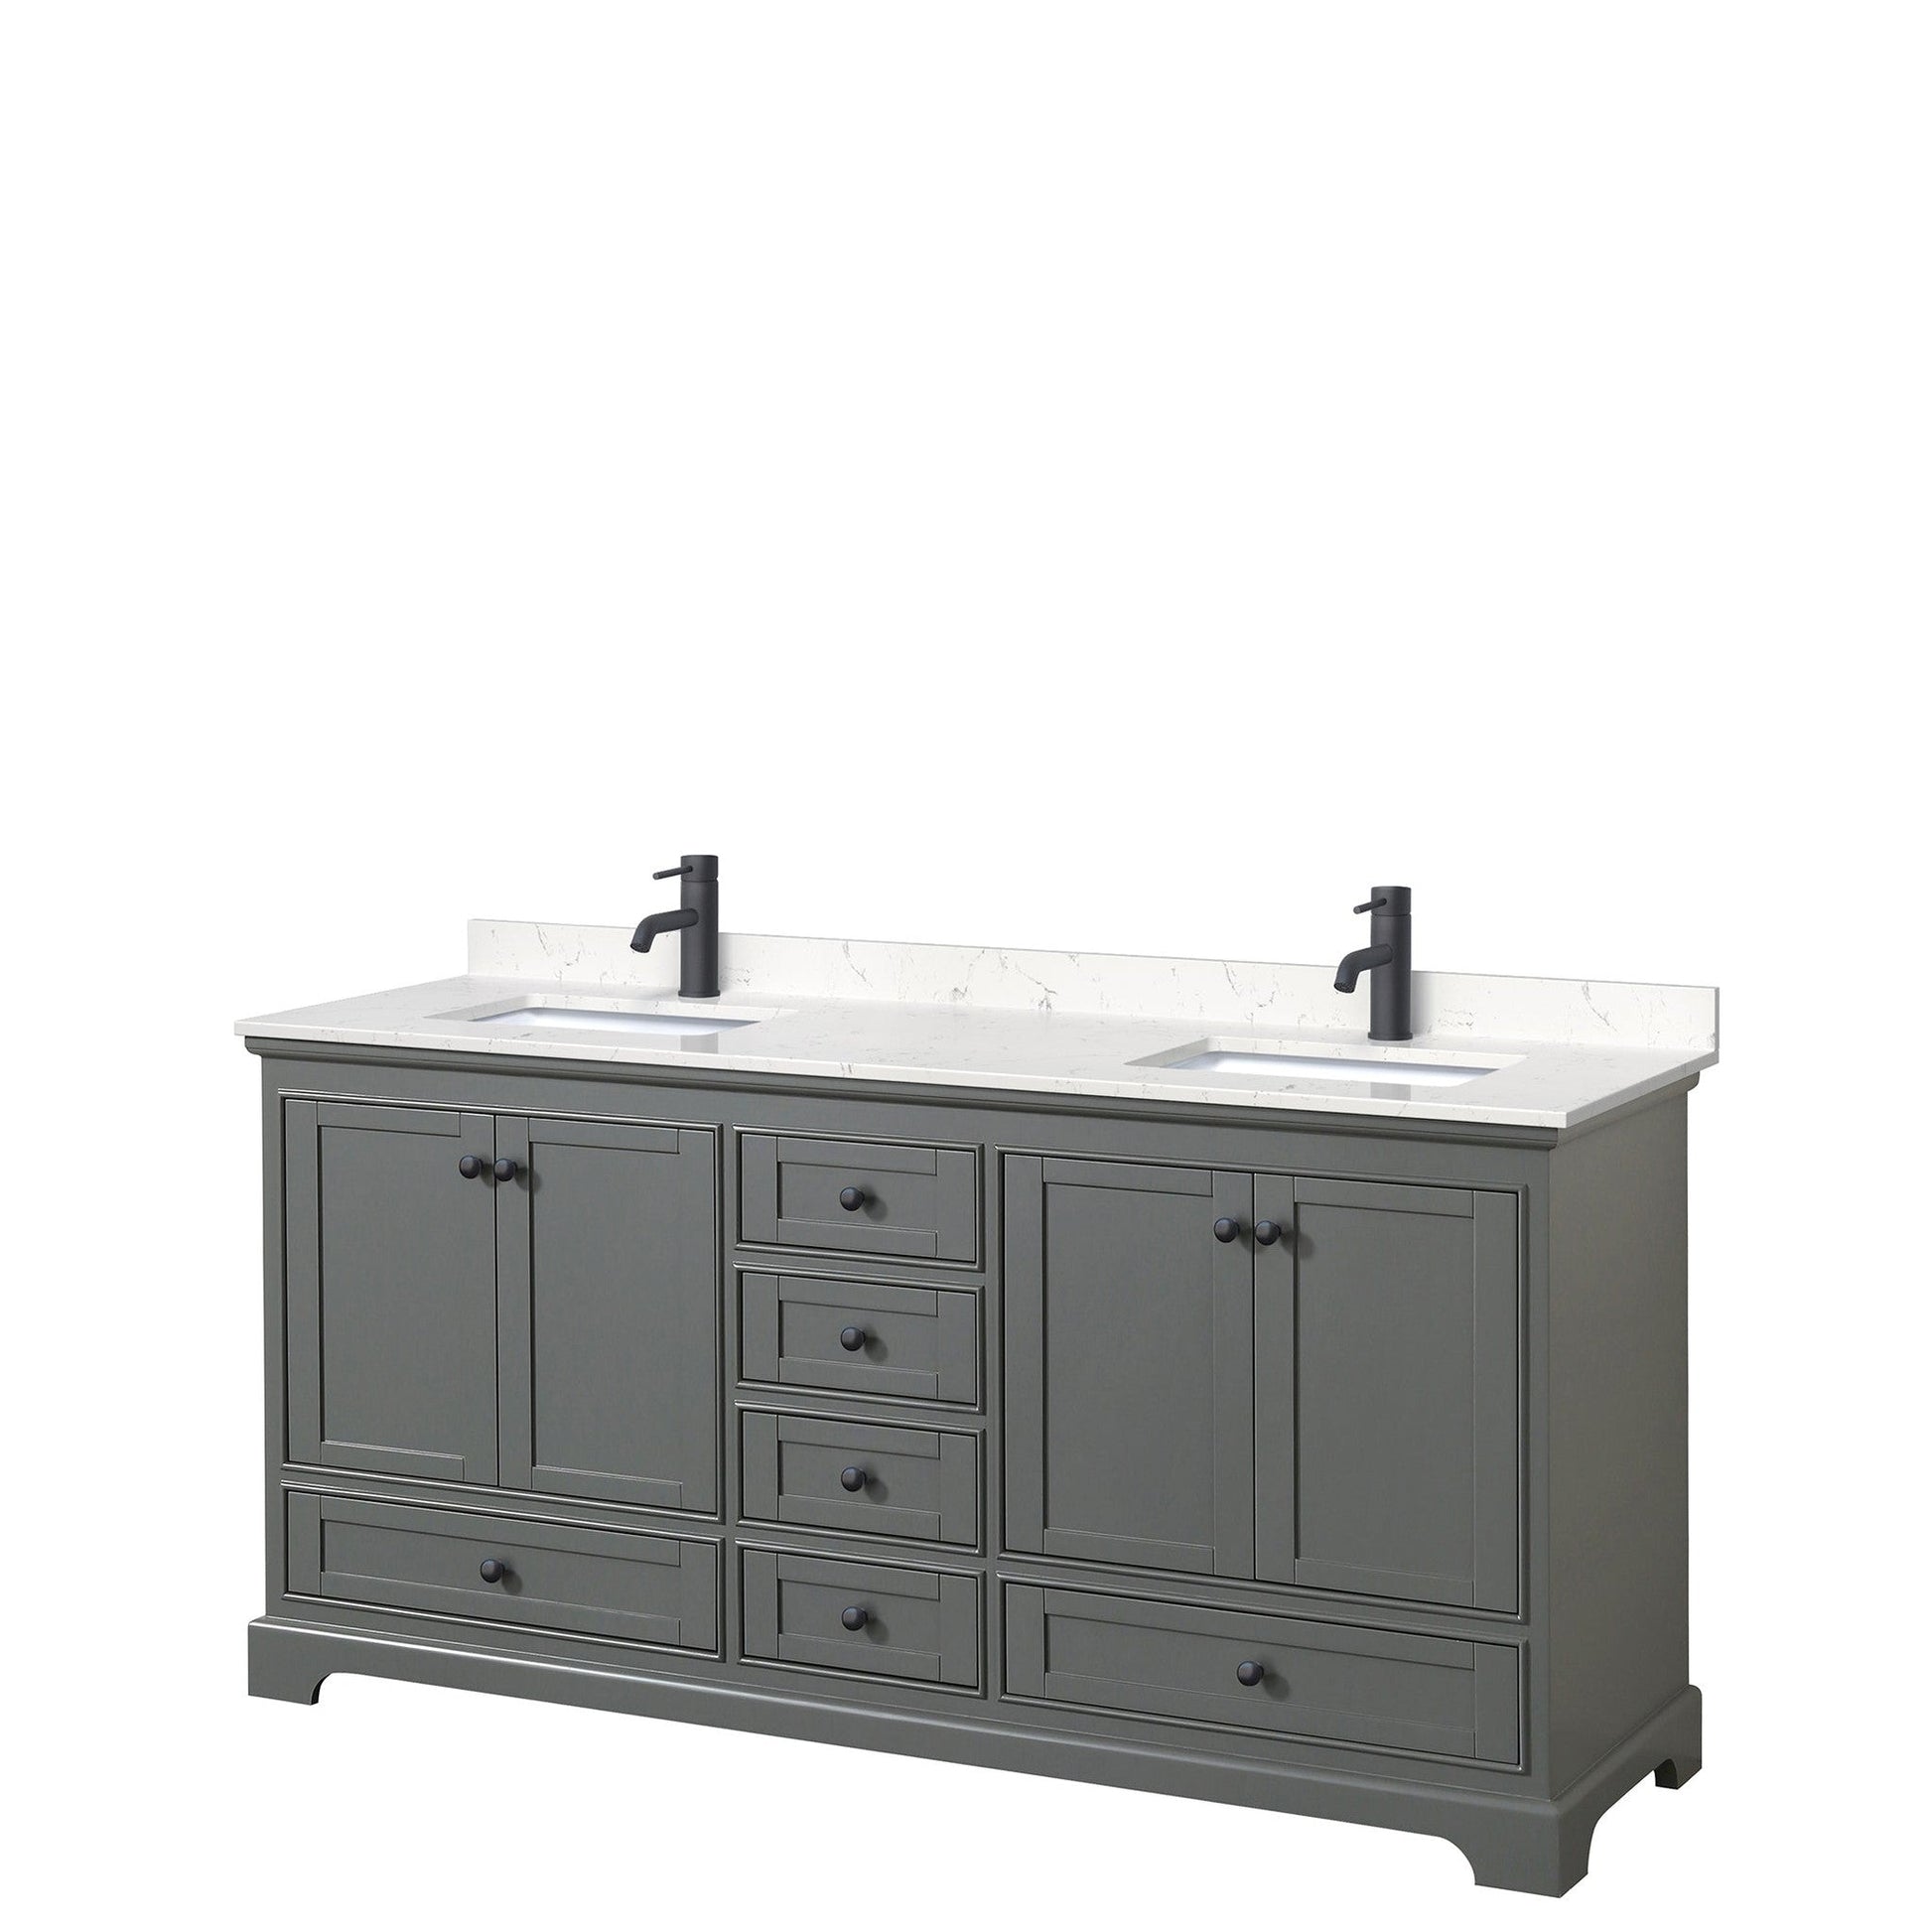 Deborah 72" Double Bathroom Vanity in Dark Gray, Carrara Cultured Marble Countertop, Undermount Square Sinks, Matte Black Trim